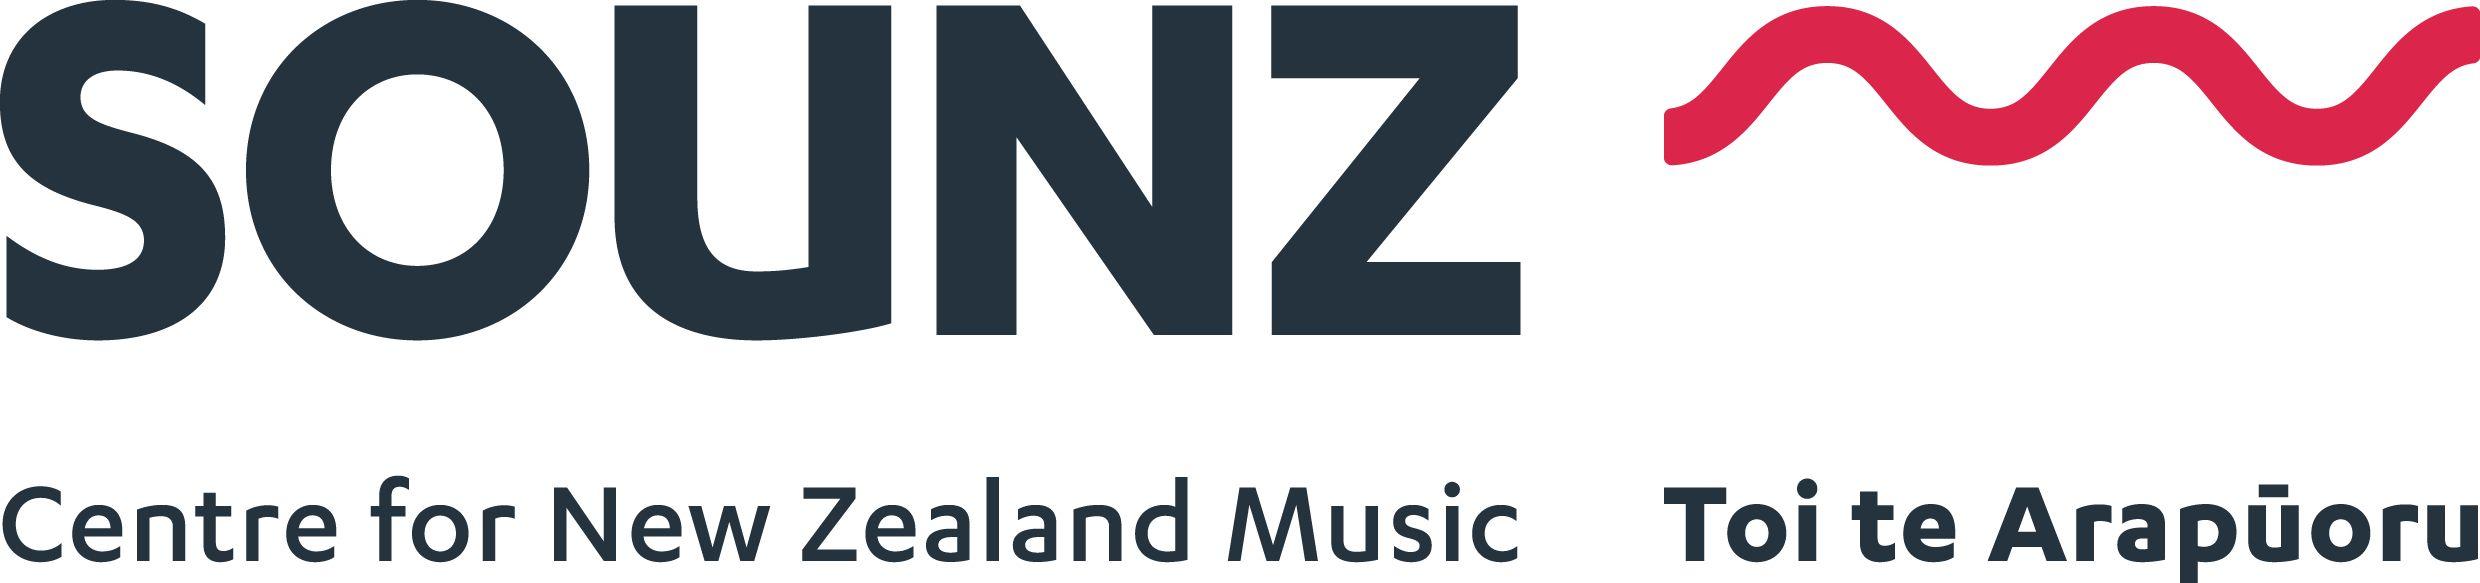 Nga Logo - SOUNZ SOUNZ logos. Ngā Waitohu o SOUNZ